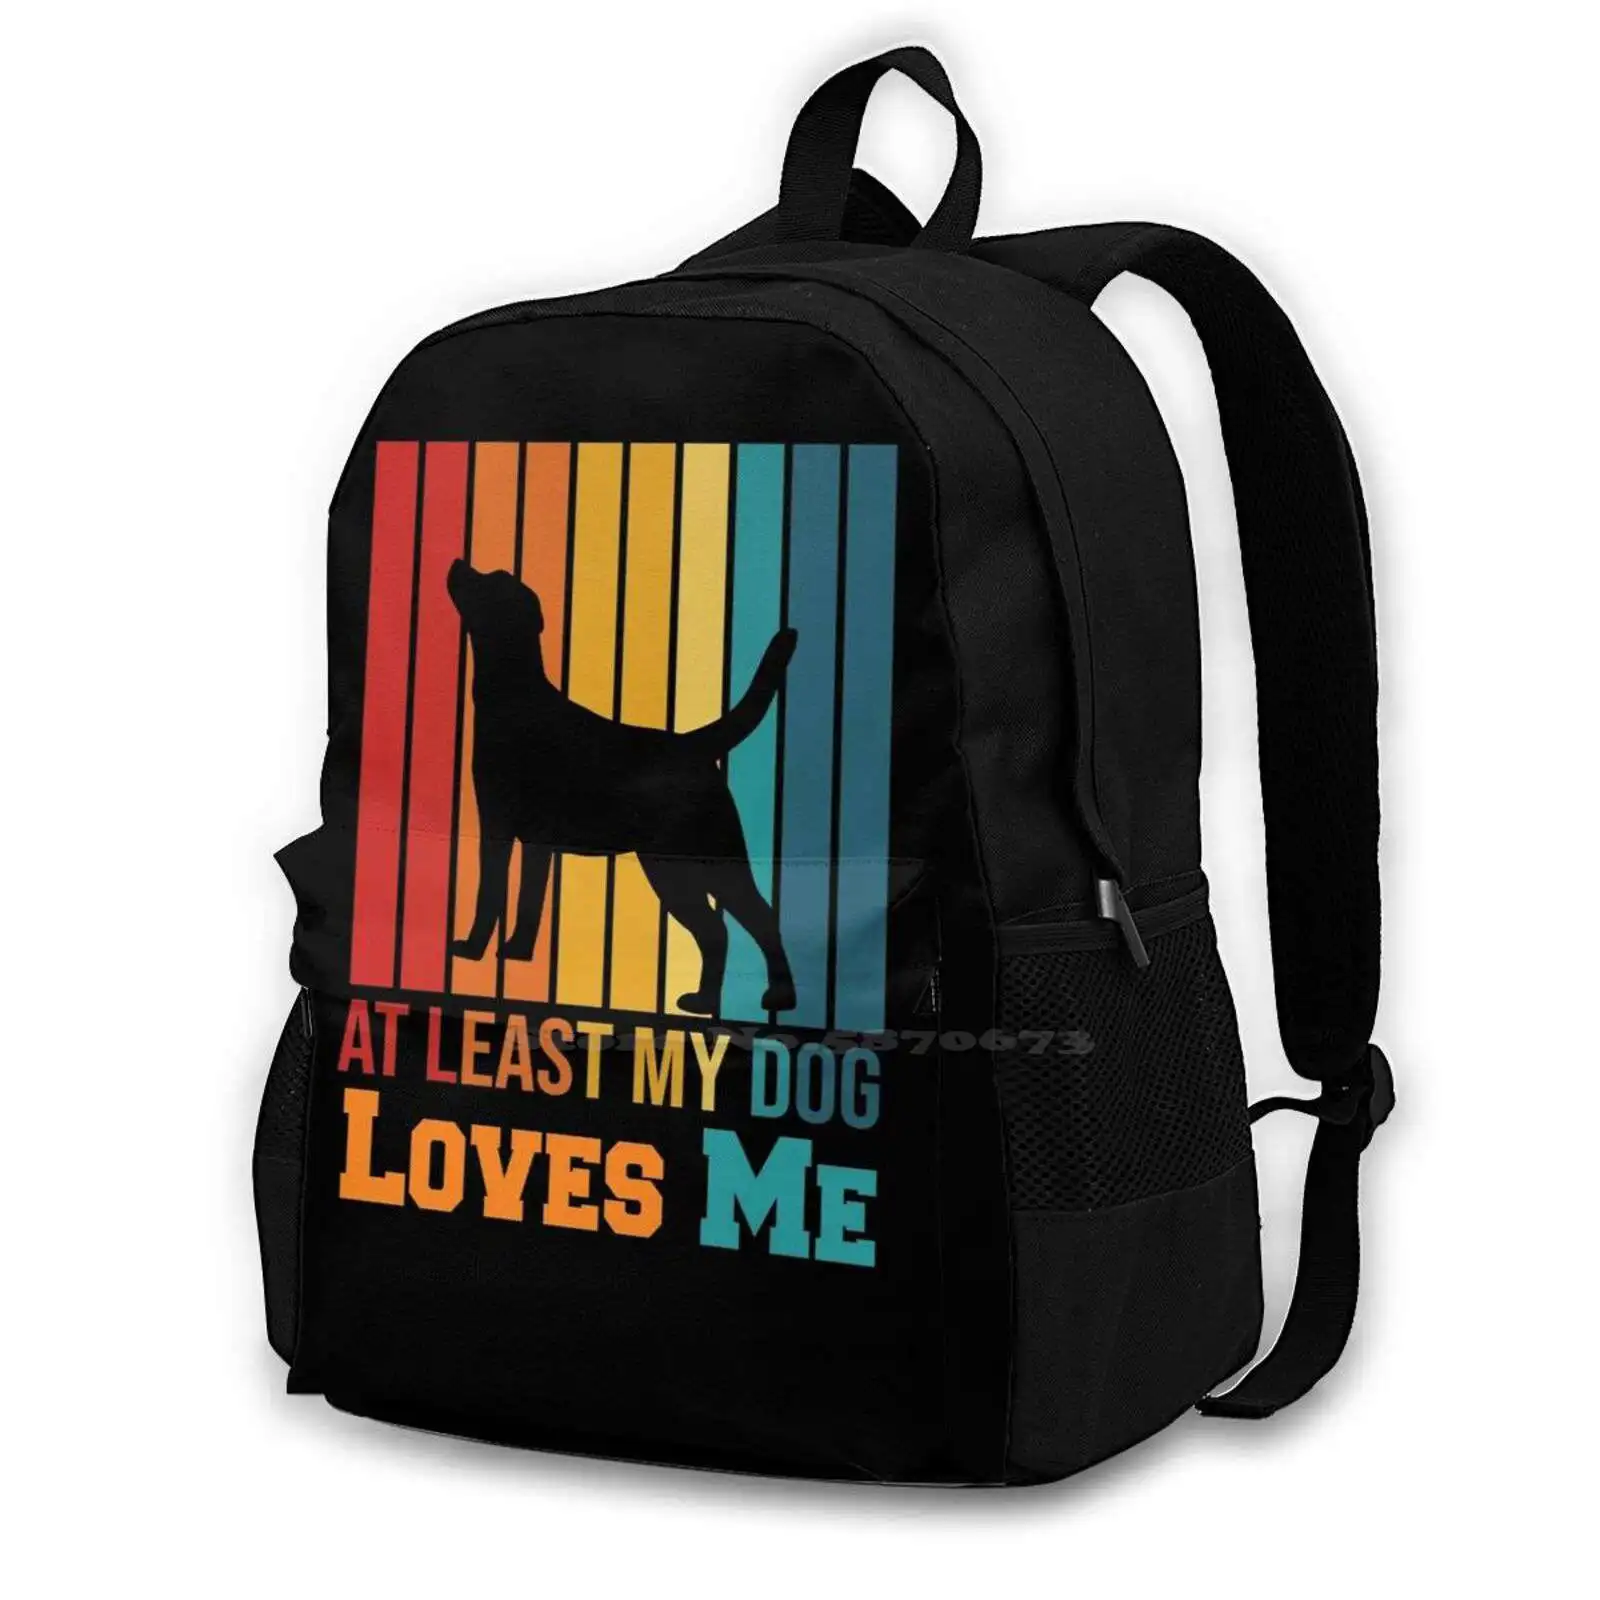 

At Least My Dog Loves Me Bag Backpack For Men Women Girls Teenage Black At Least My Dog Loves Me Dog Lover Dogs Funny Pets